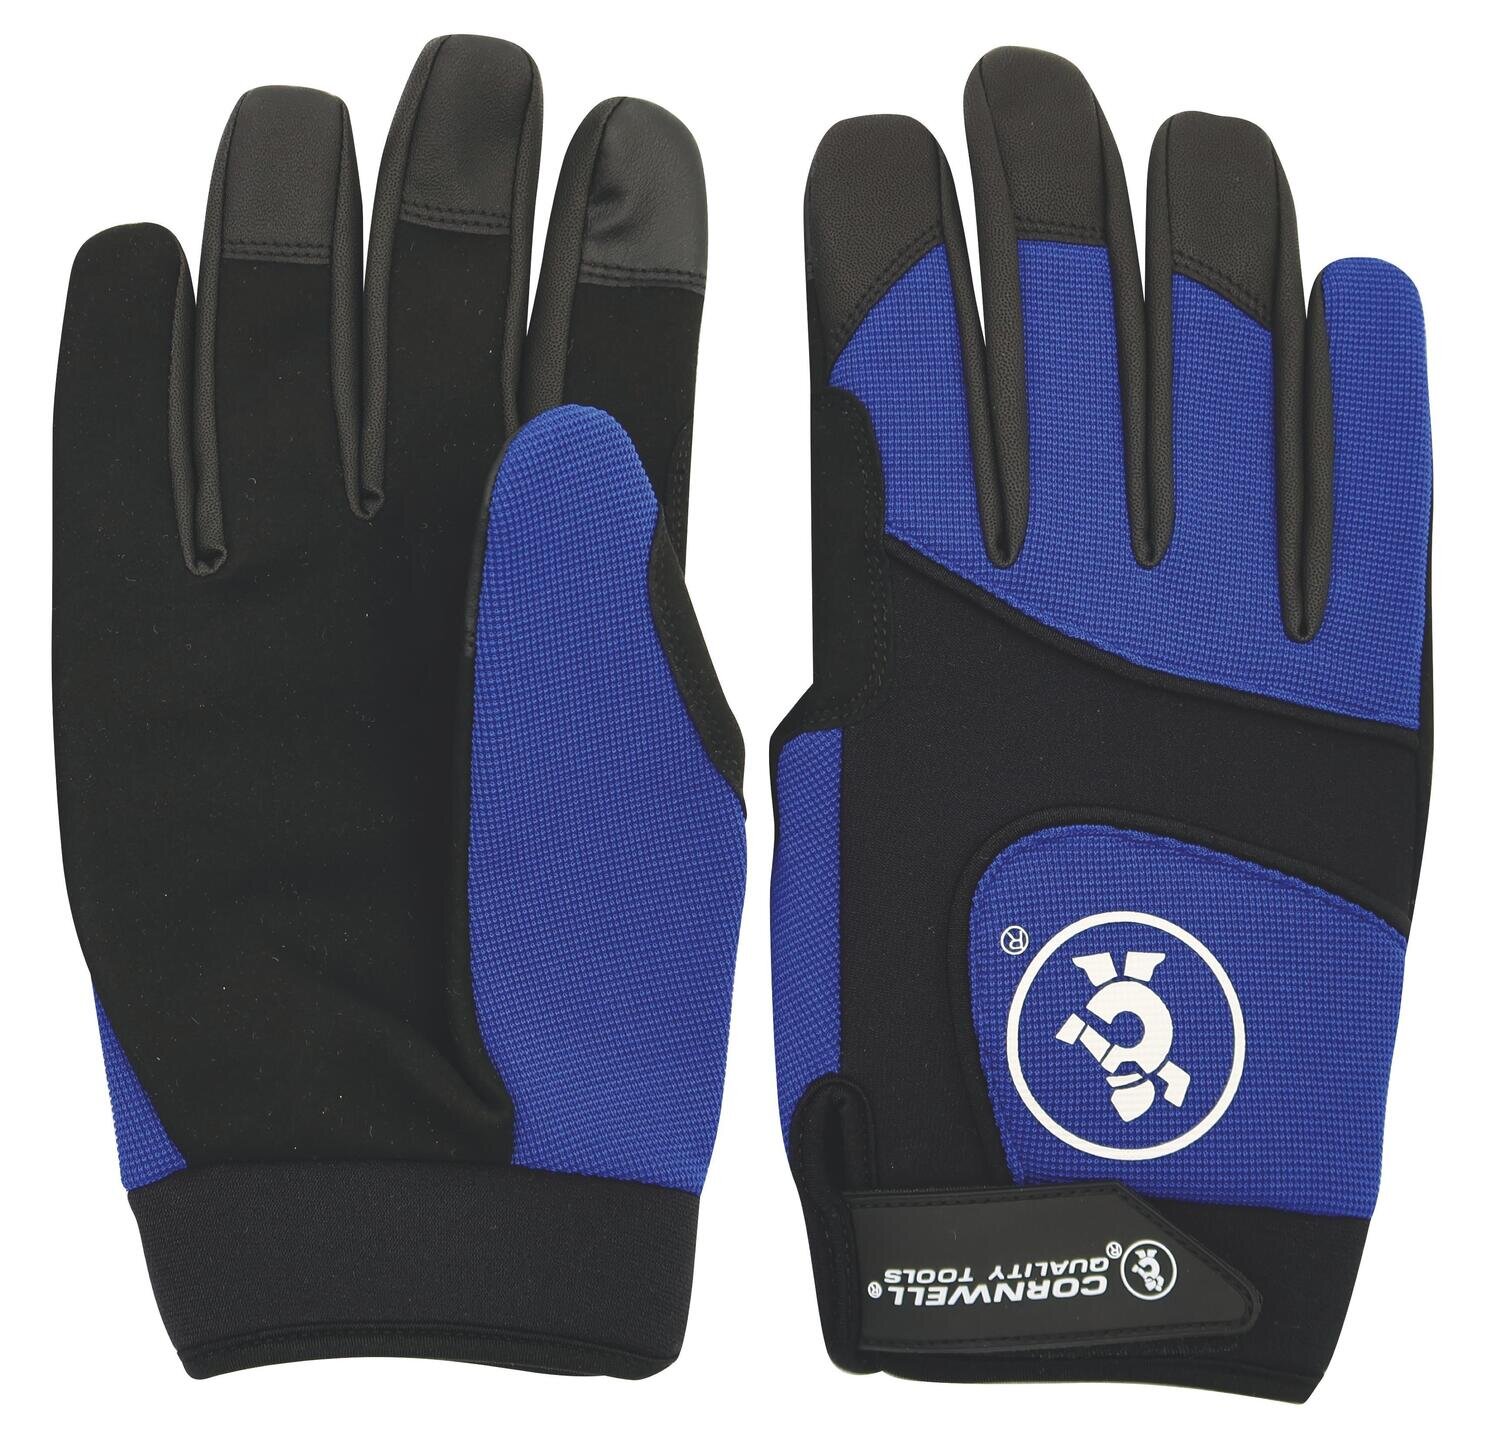 CTGMGBM - Blue Mechanic's Gloves, M